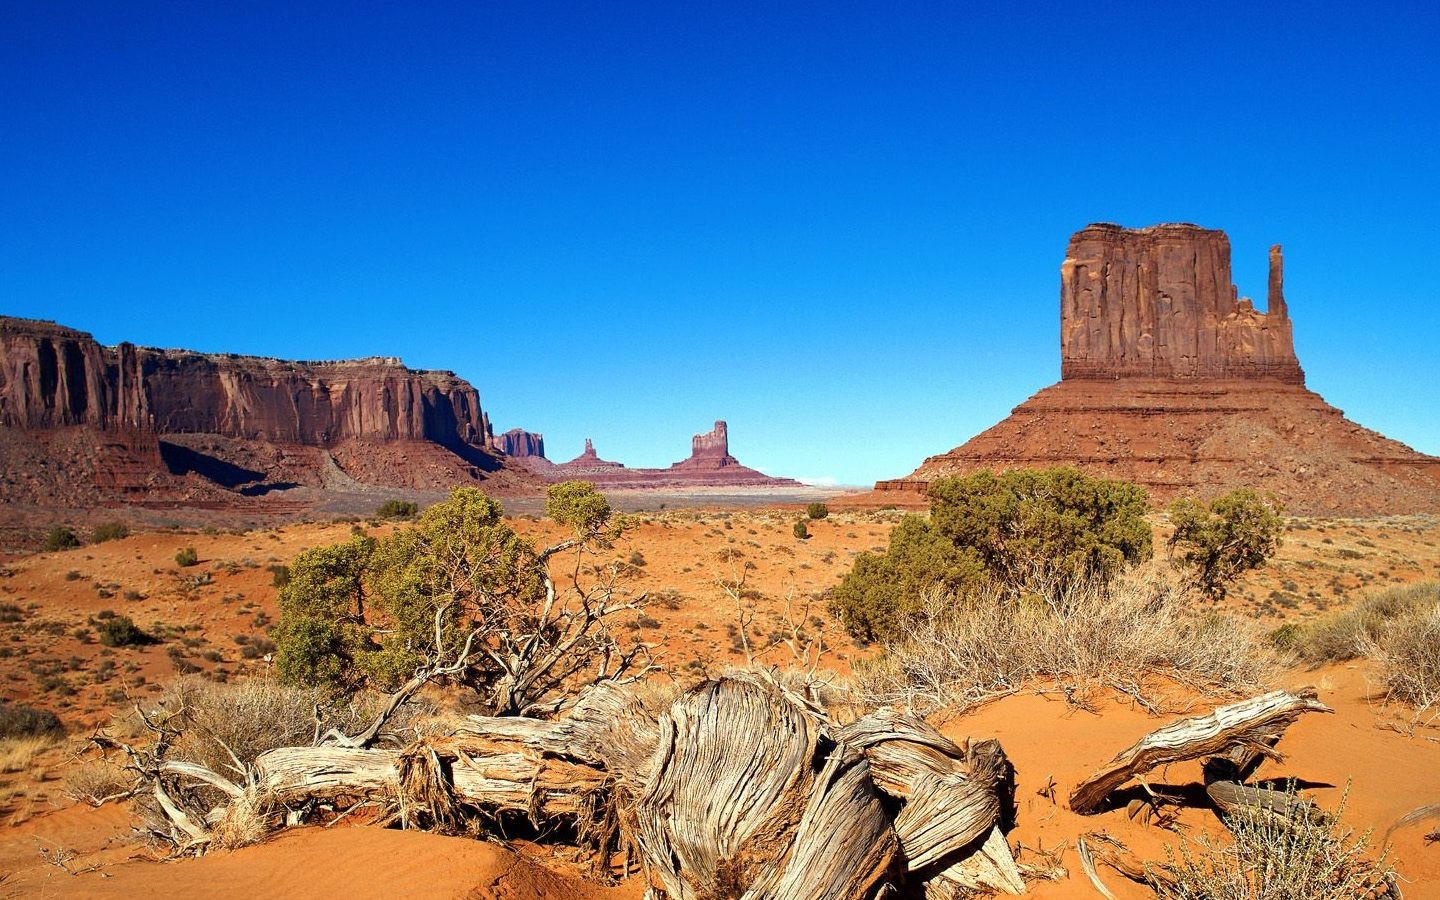 General 1440x900 landscape Arizona Monument Valley desert dead trees USA rock formation rocks